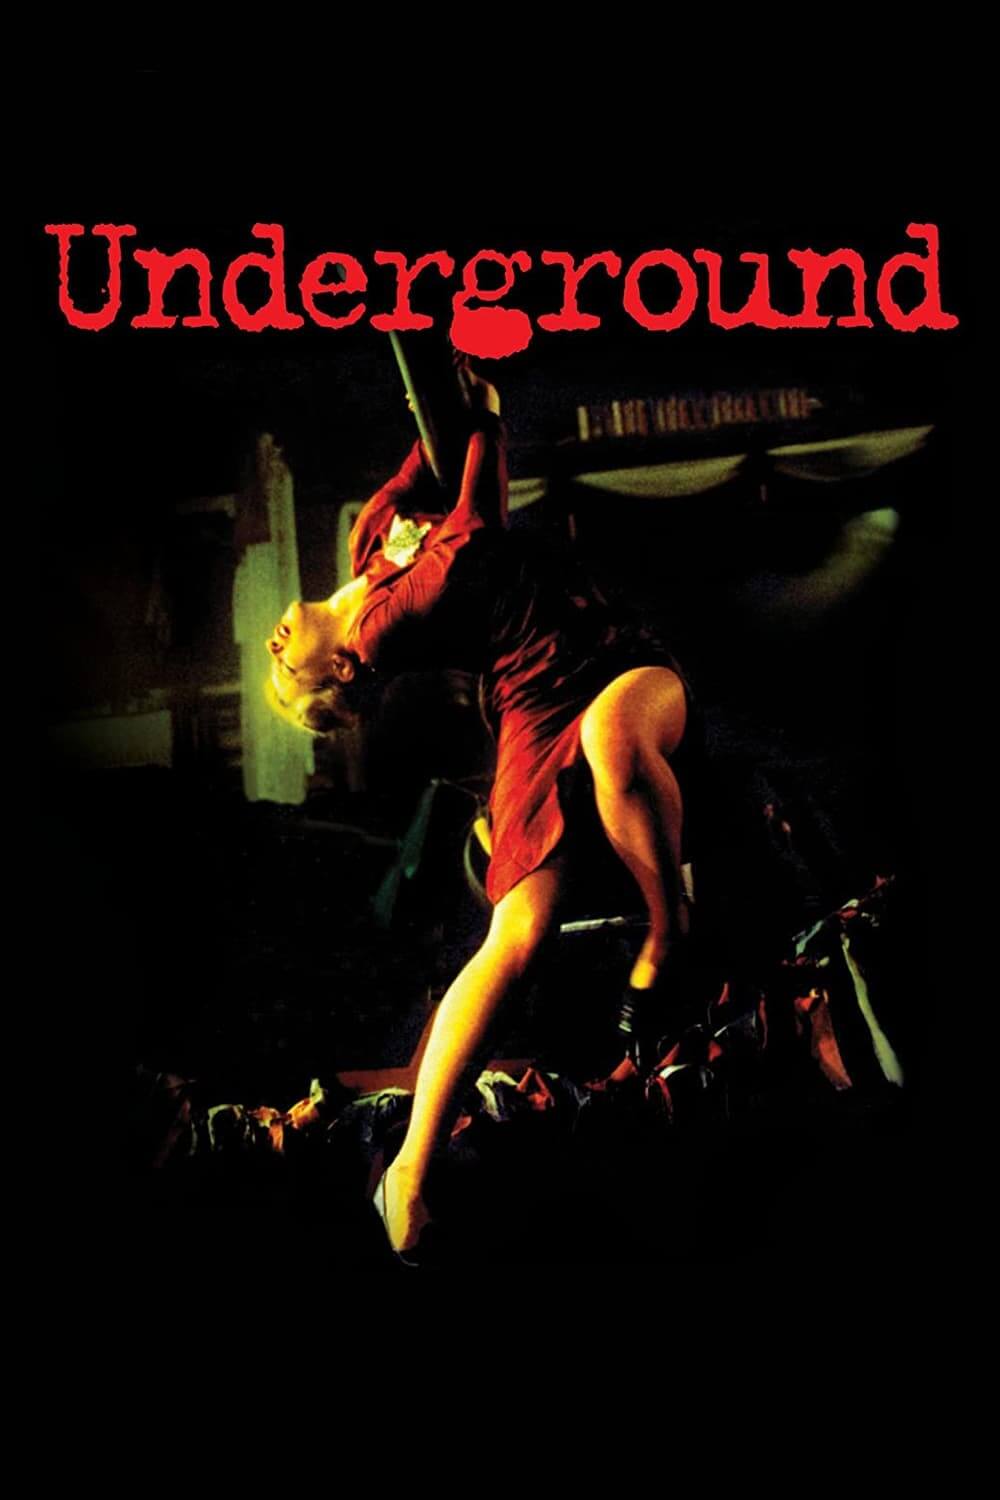 زیرزمین (Underground)